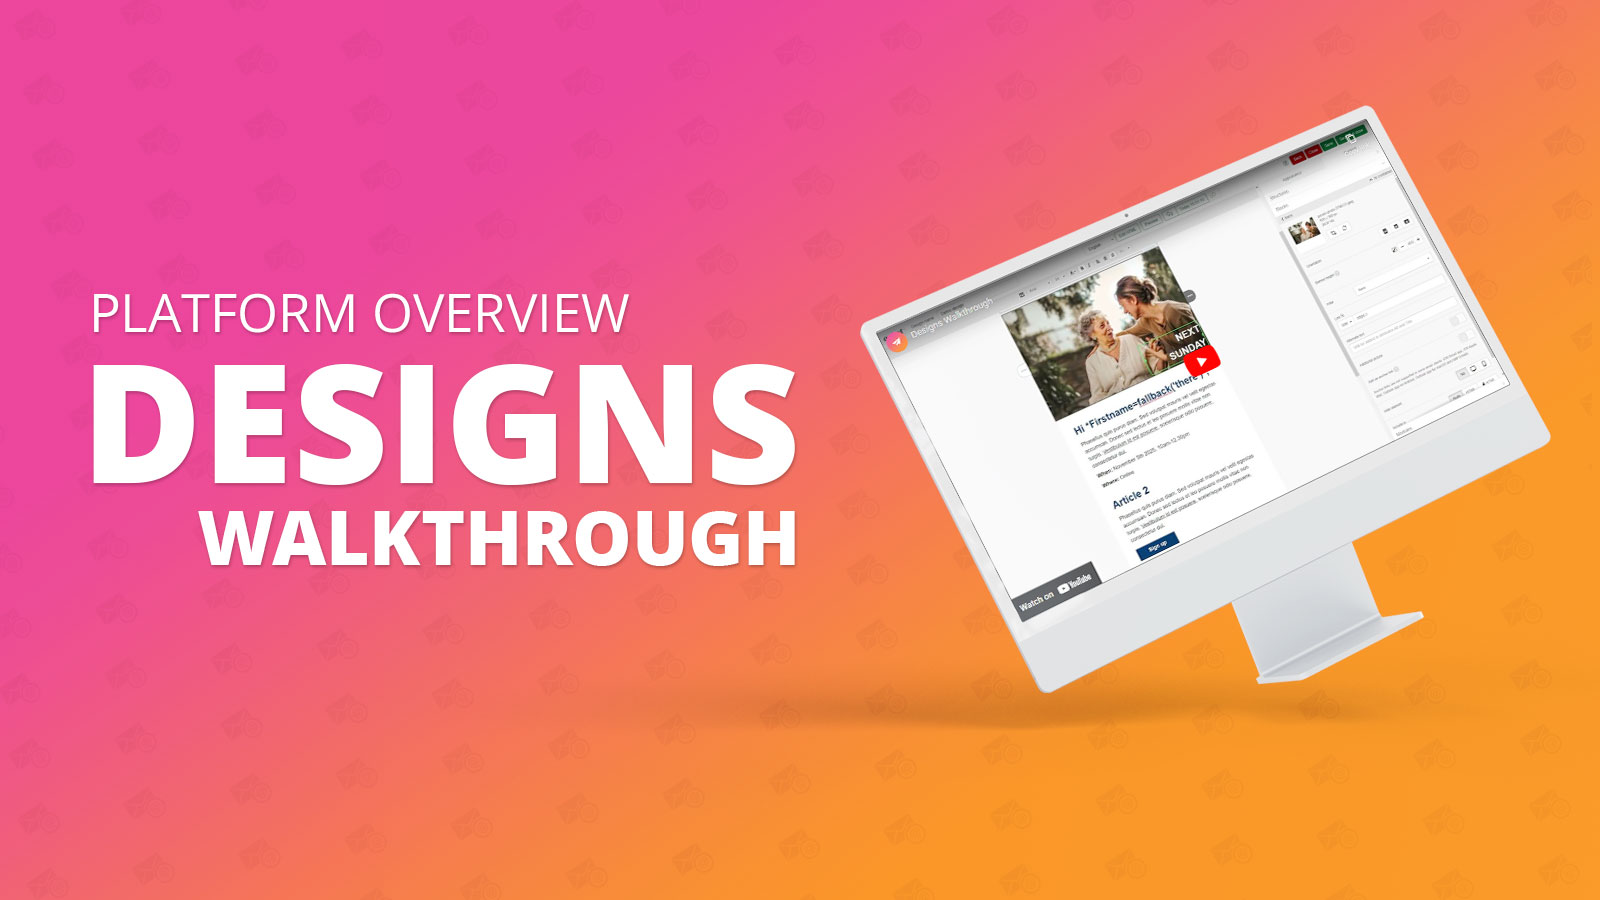 Designs walkthrough: Platform overview